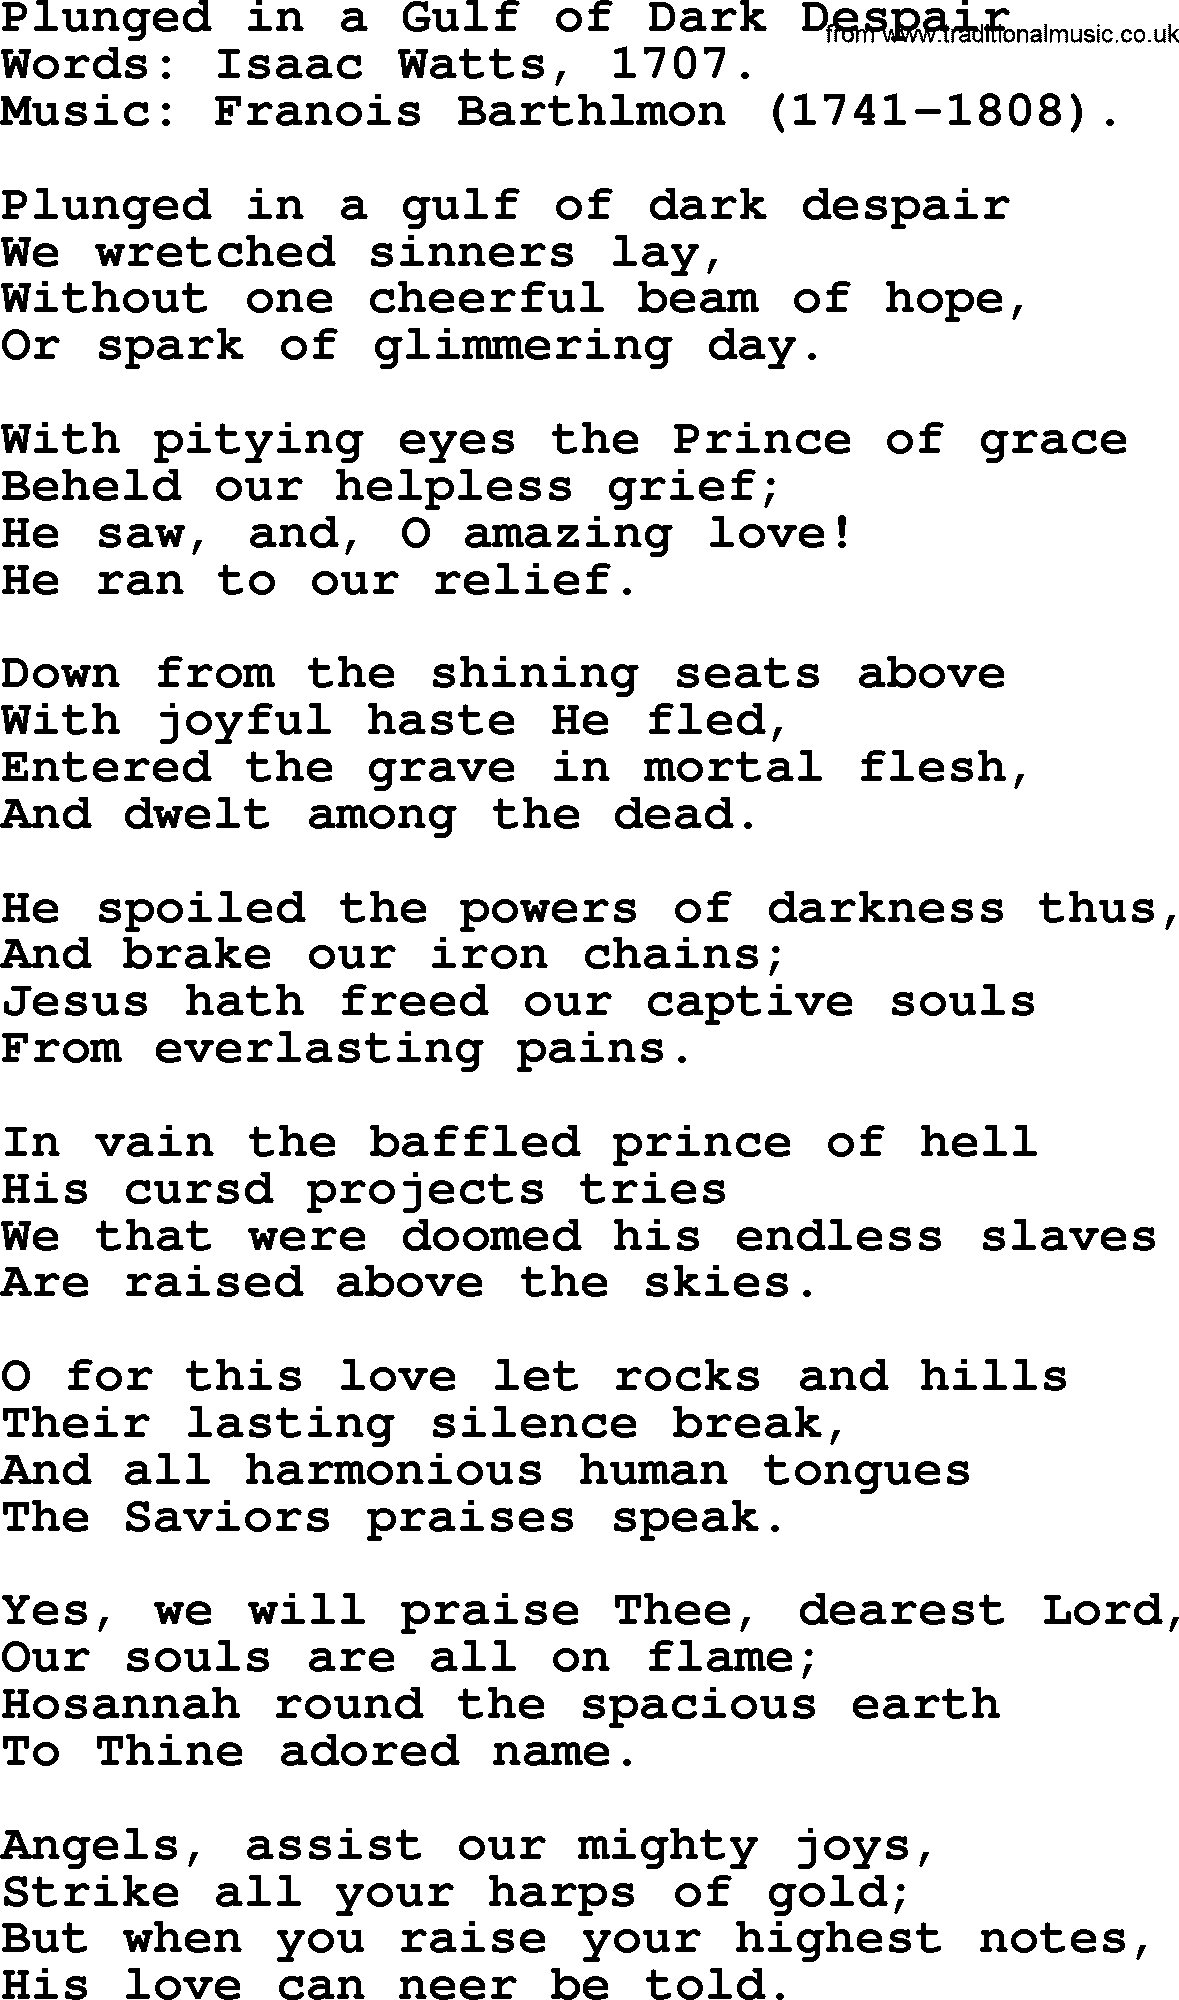 Isaac Watts Christian hymn: Plunged in a Gulf of Dark Despair- lyricss